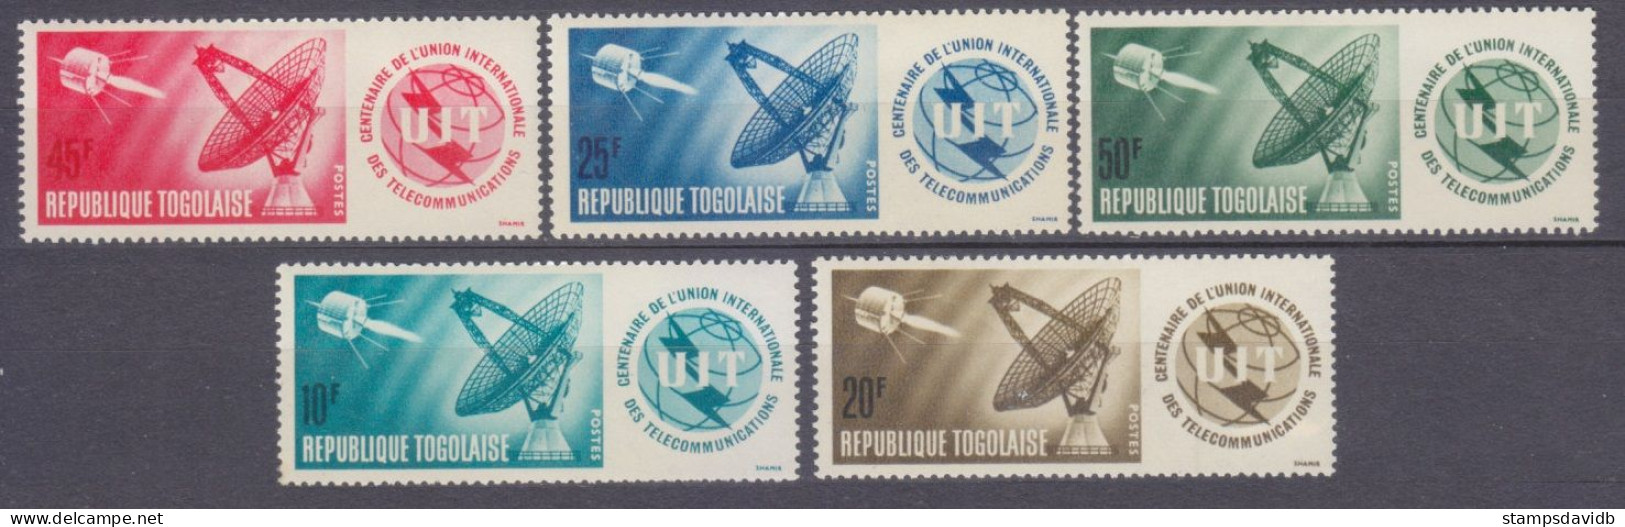 1965 Togo 457-461 100 Years Of ITU - UPU (Universal Postal Union)